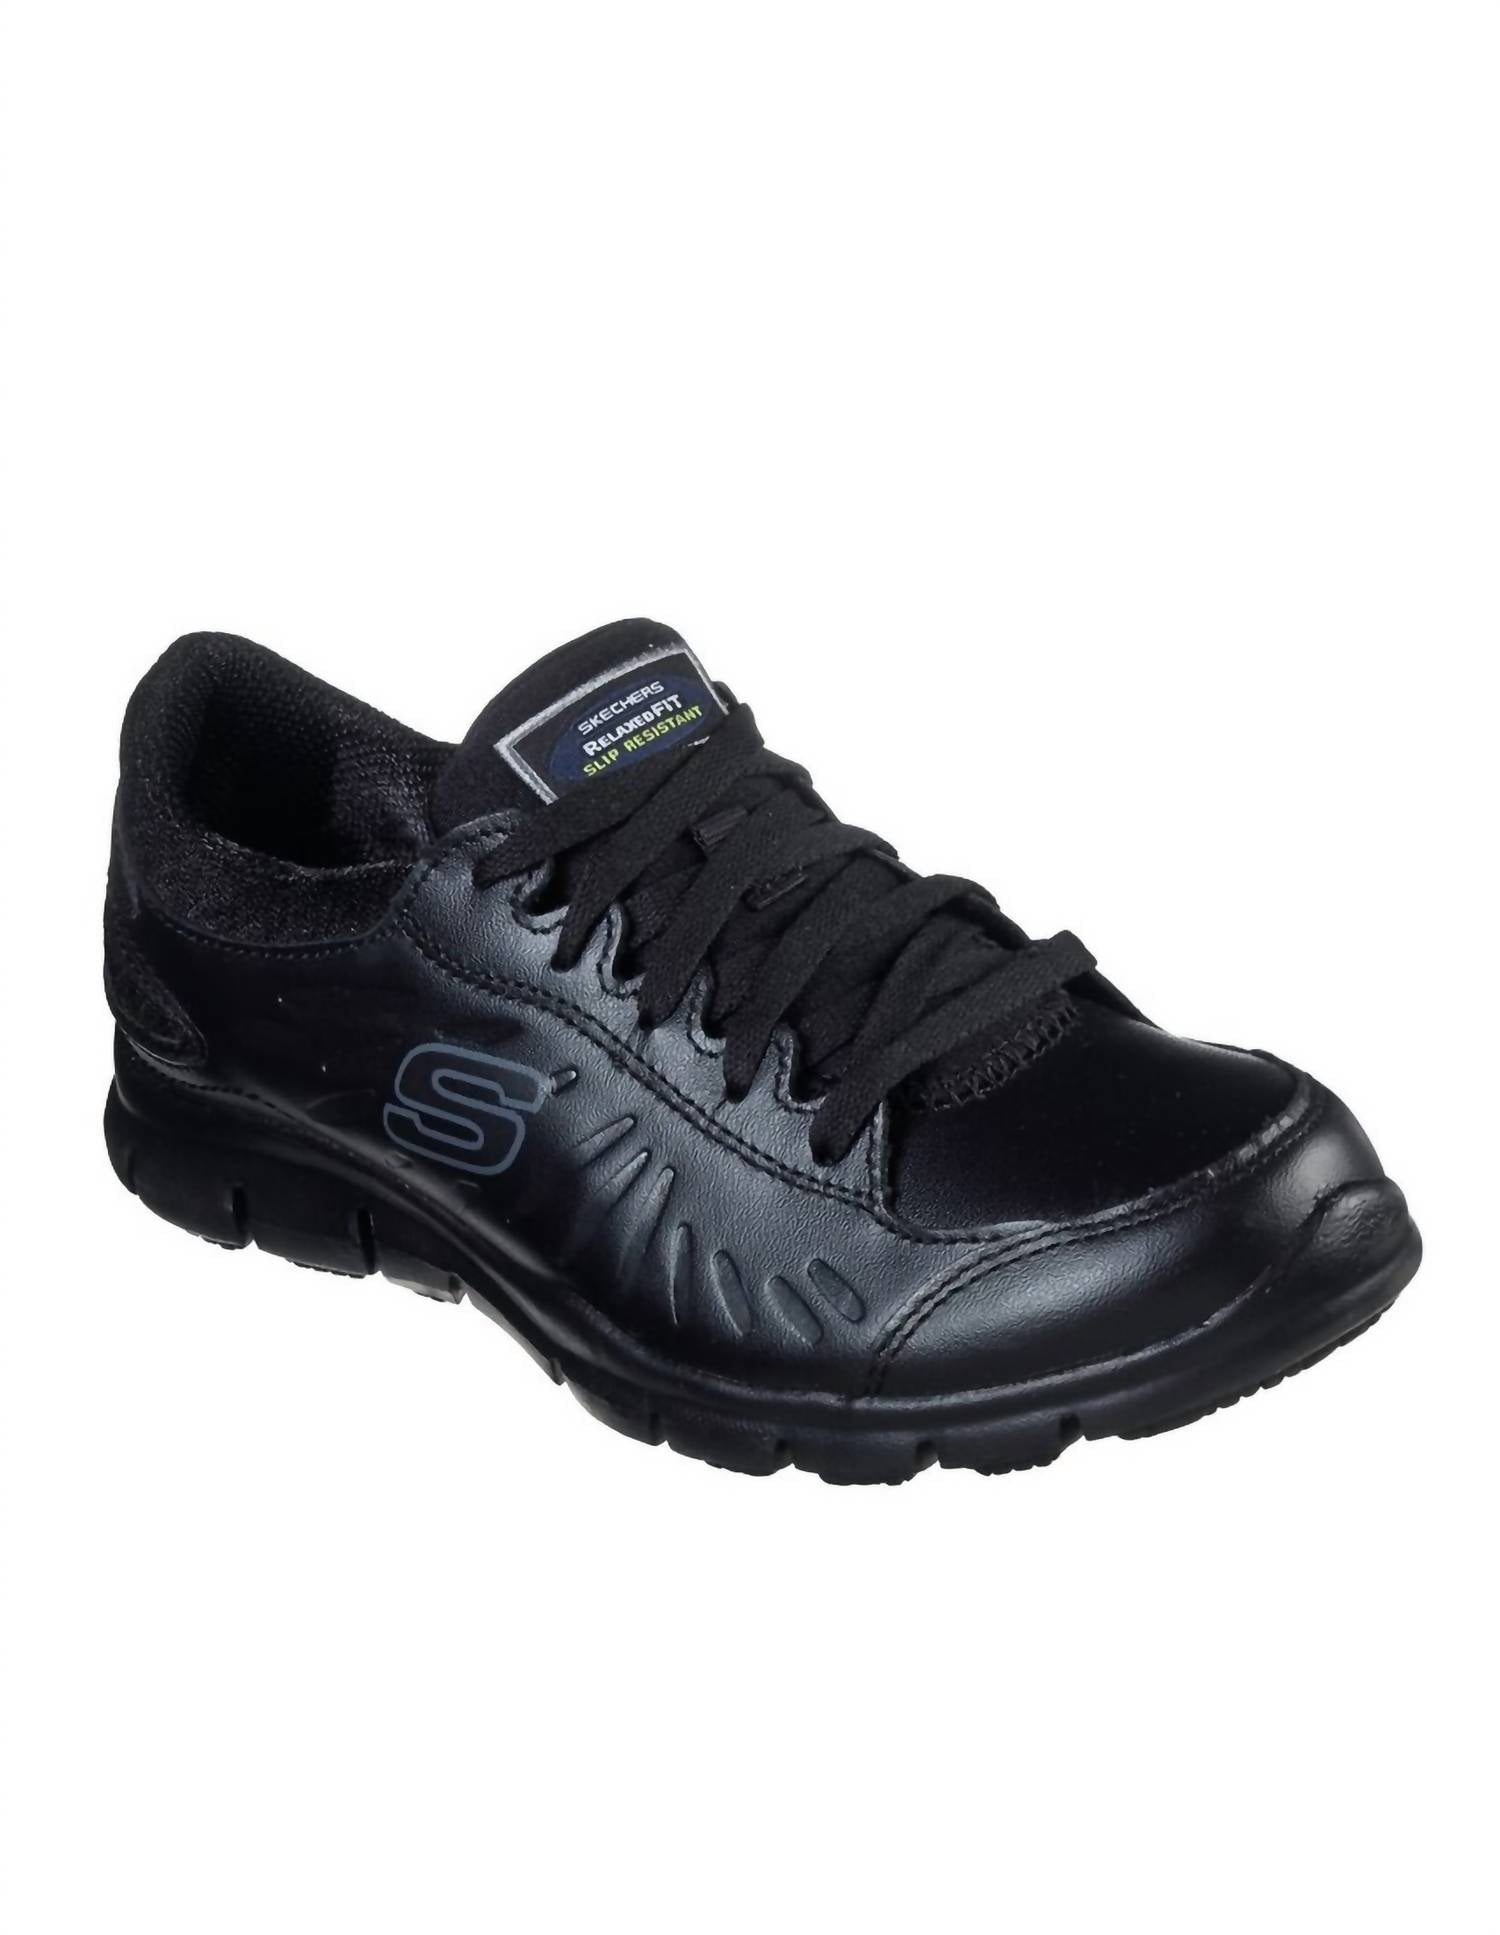 Skechers Women's Eldred Sr Work Shoes - Extra Wide In Black US 9.5 female